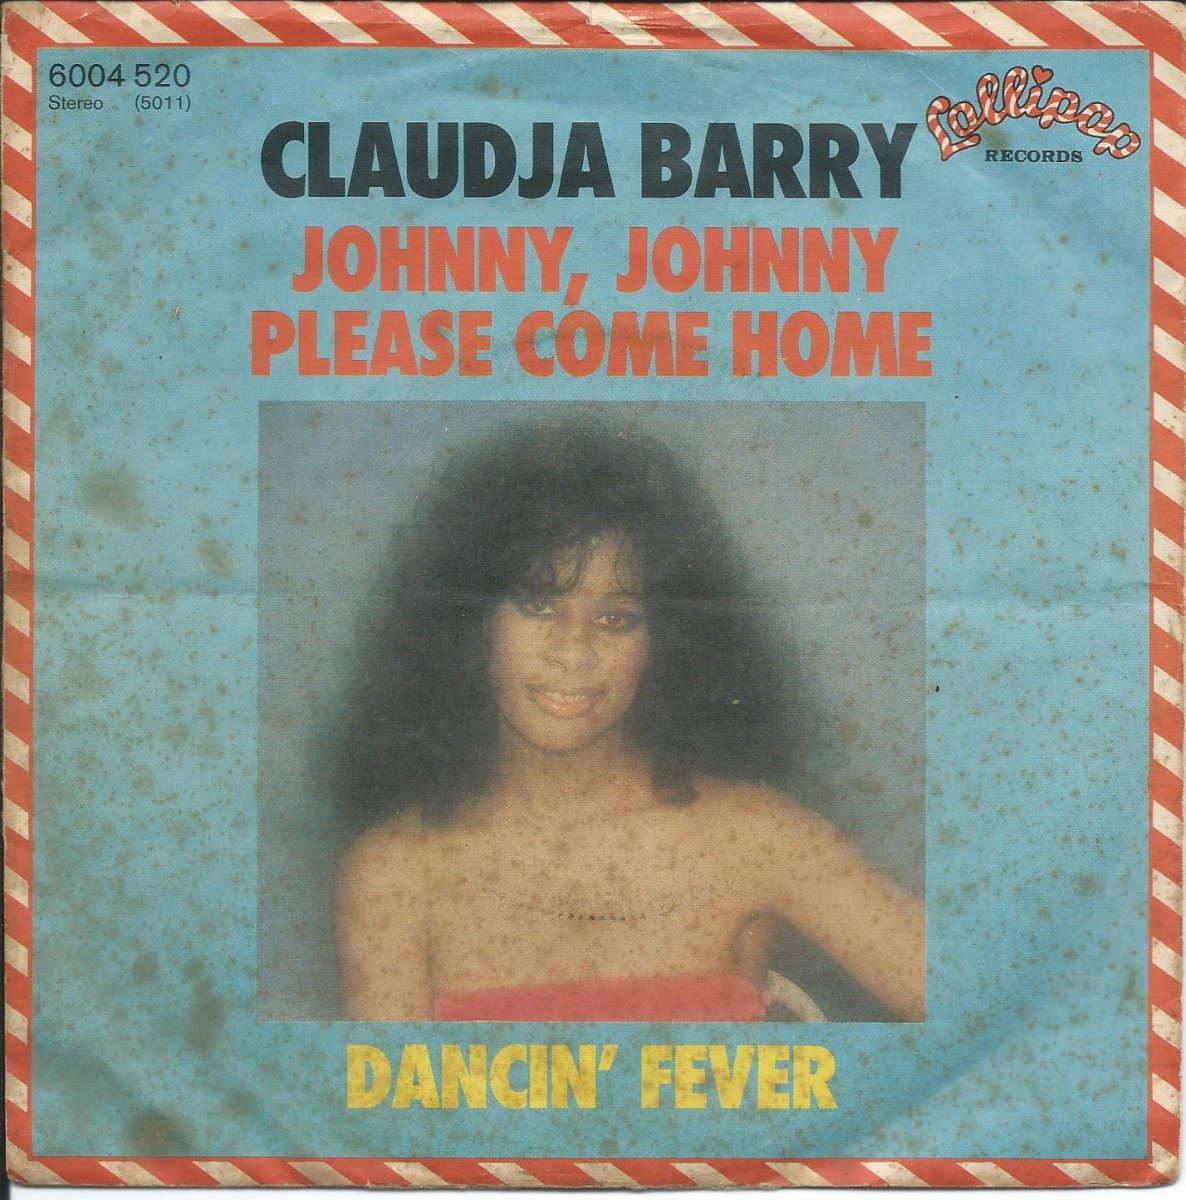 CLAUDJA BARRY / JOHNNY, JOHNNY PLEASE COME HOME / DANCIN' FEVER (7